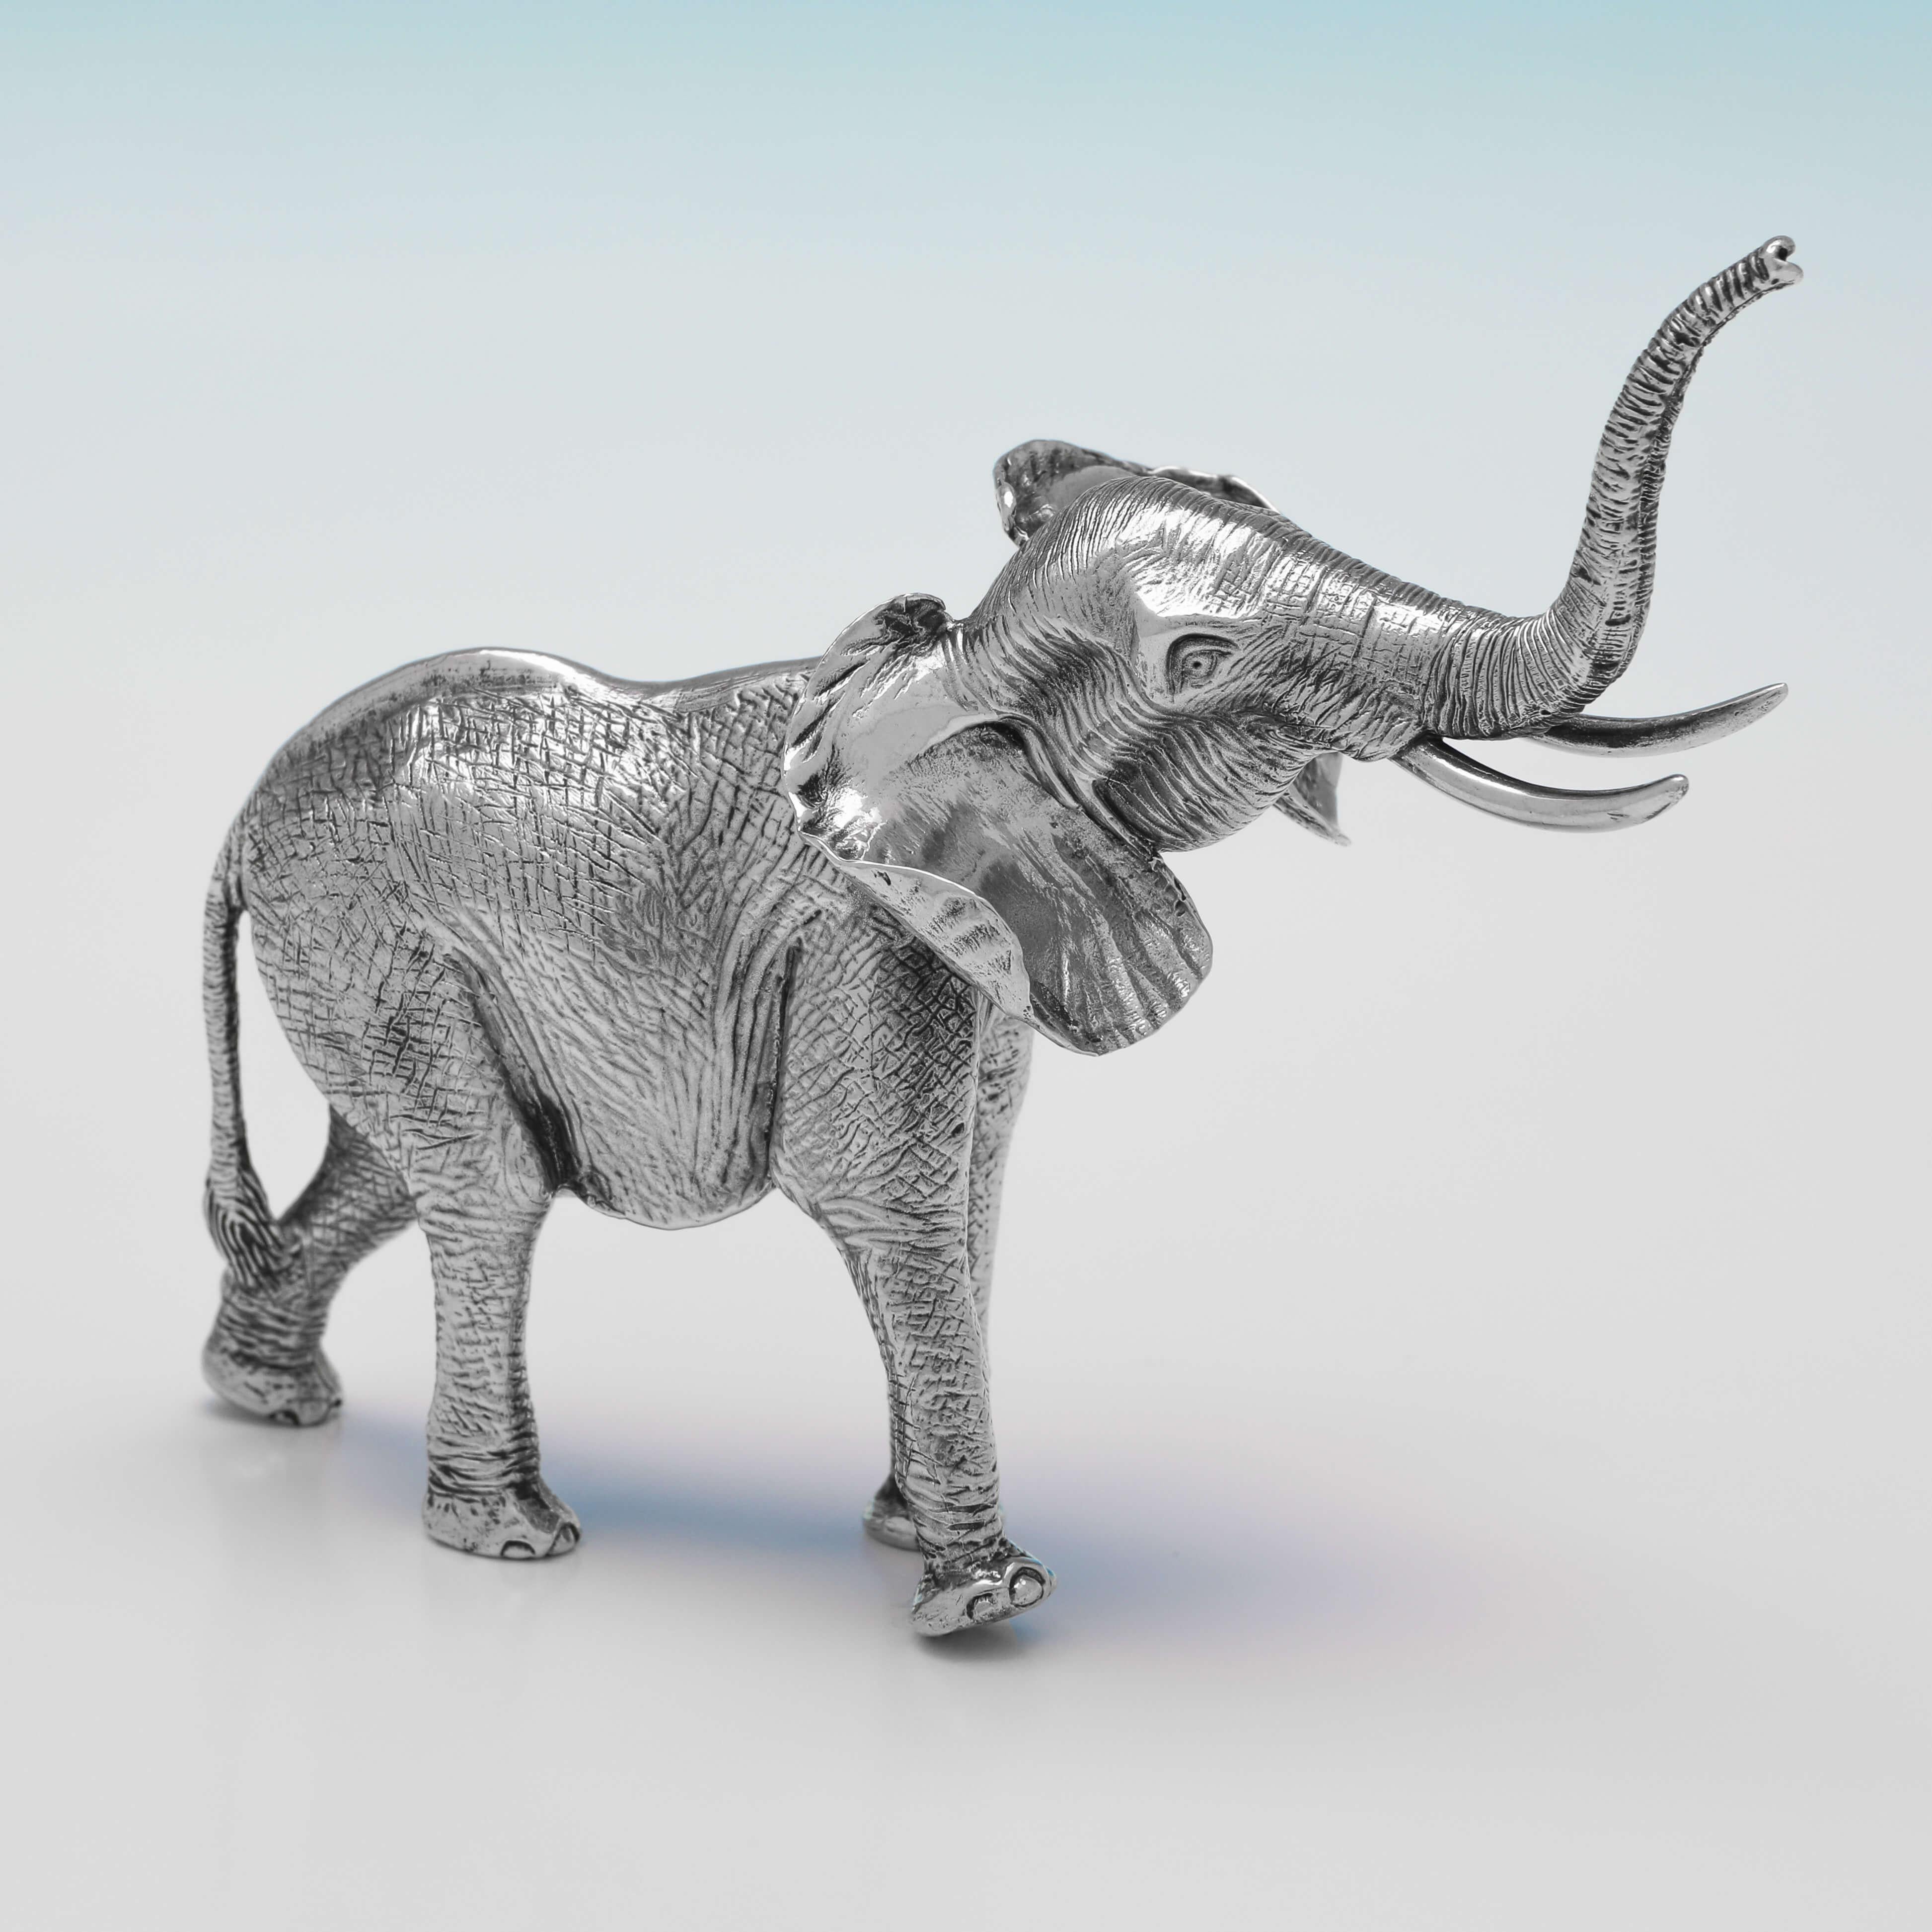 Patrick Mavros Sterling Silver Model of an Elephant, London, 2005